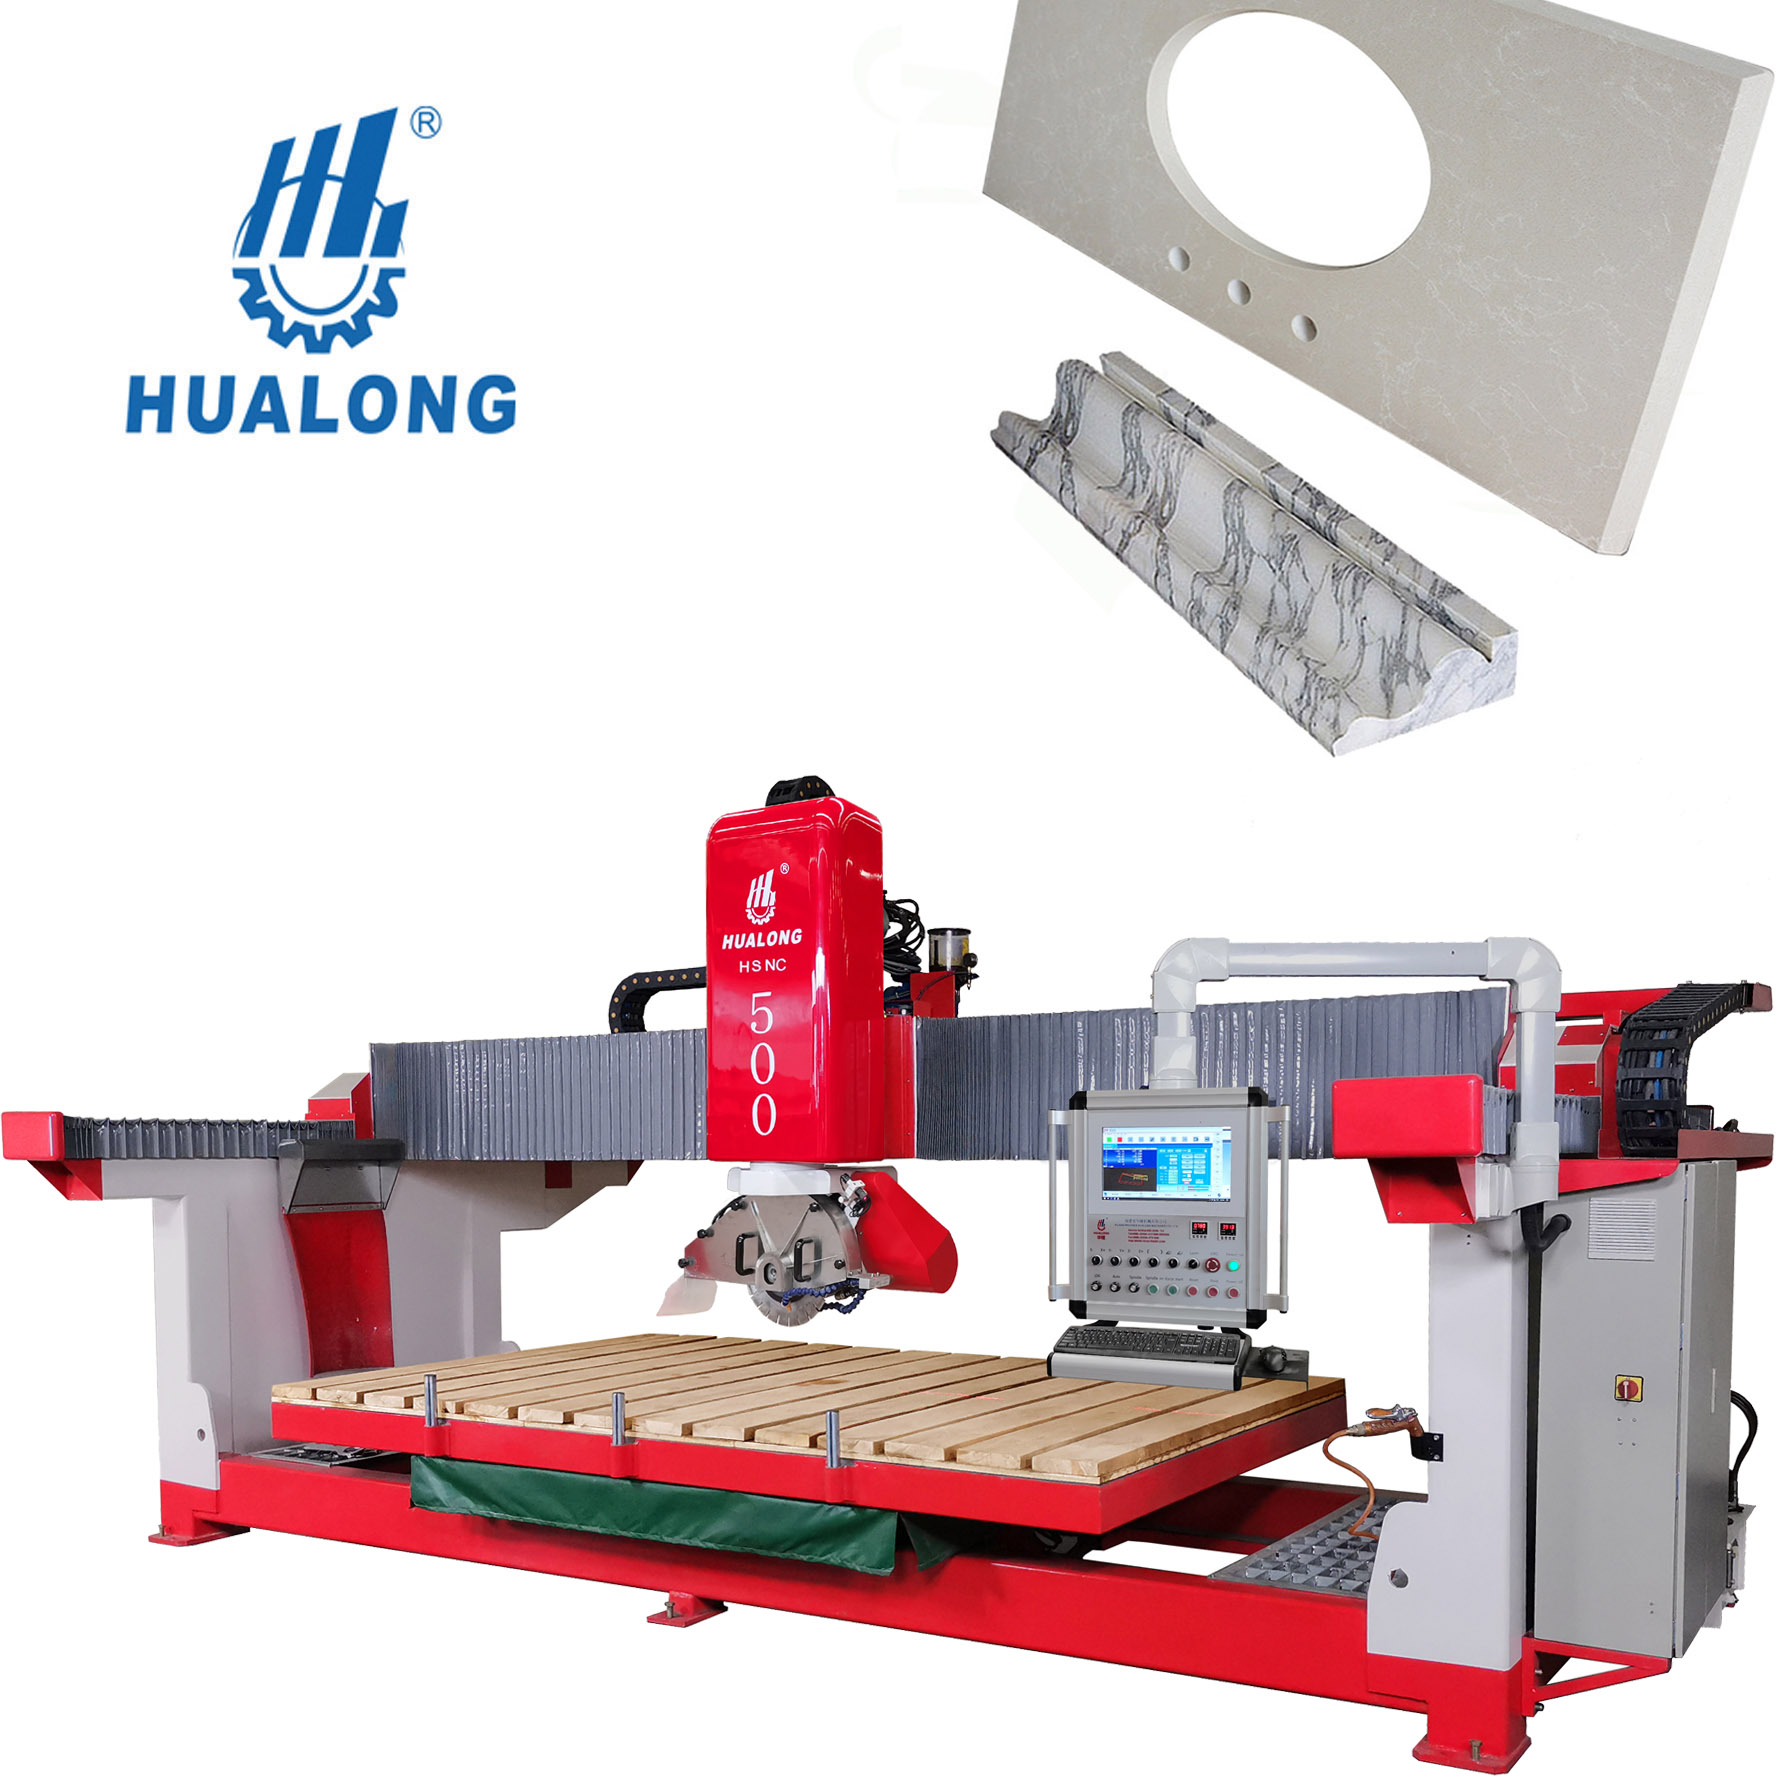 Hualong Machinery HSNC-500 Full Automatic Bridge Stone Cutting Machine With Countertop Milling Function